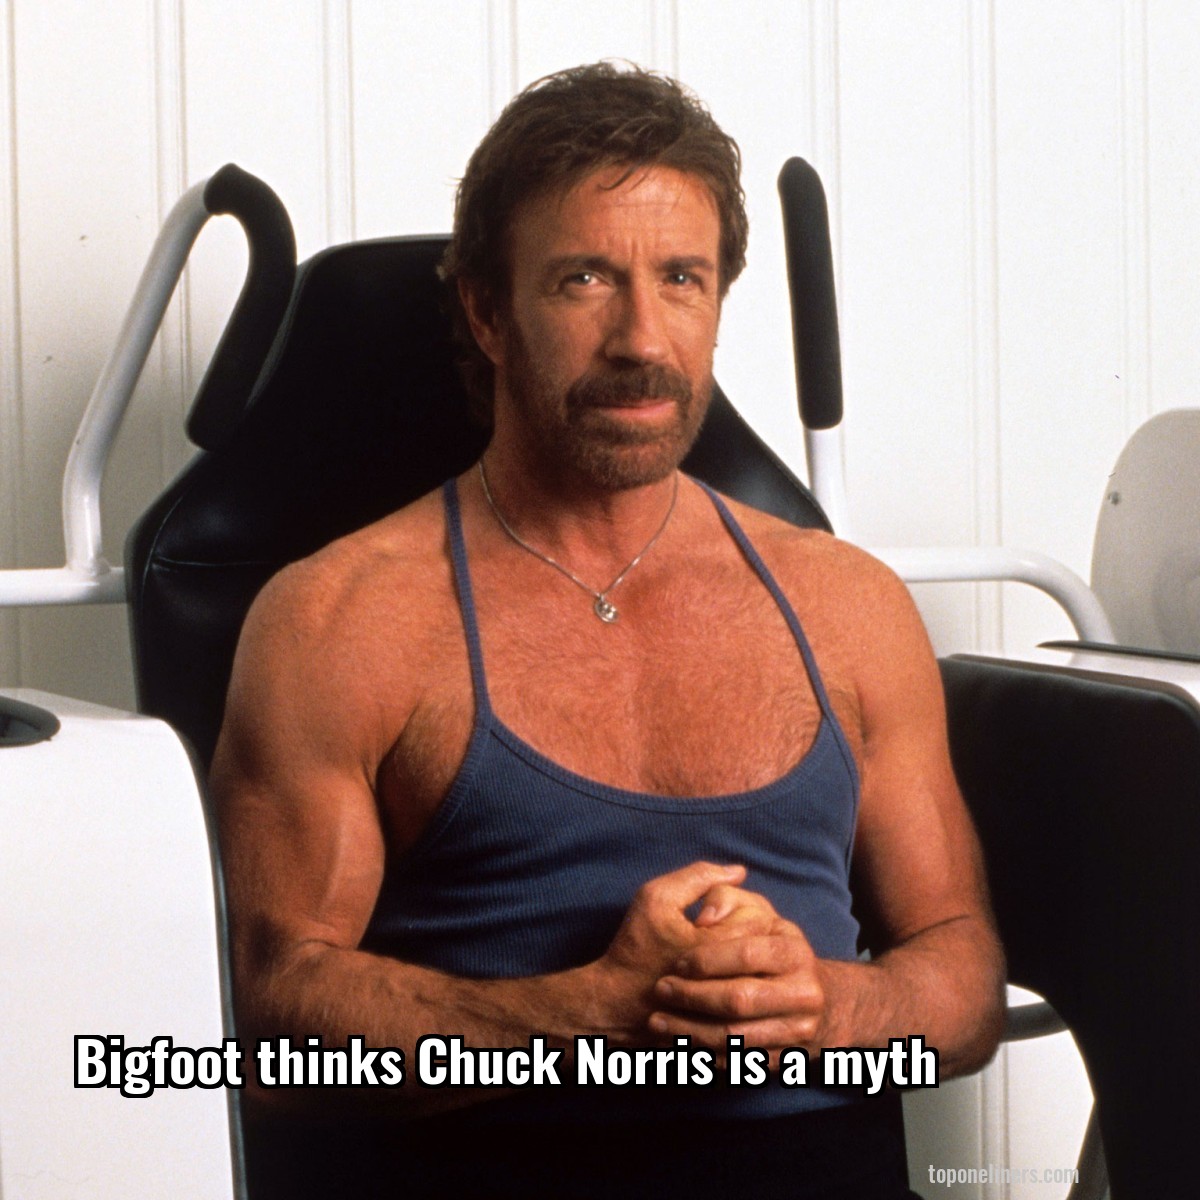 Bigfoot thinks Chuck Norris is a myth